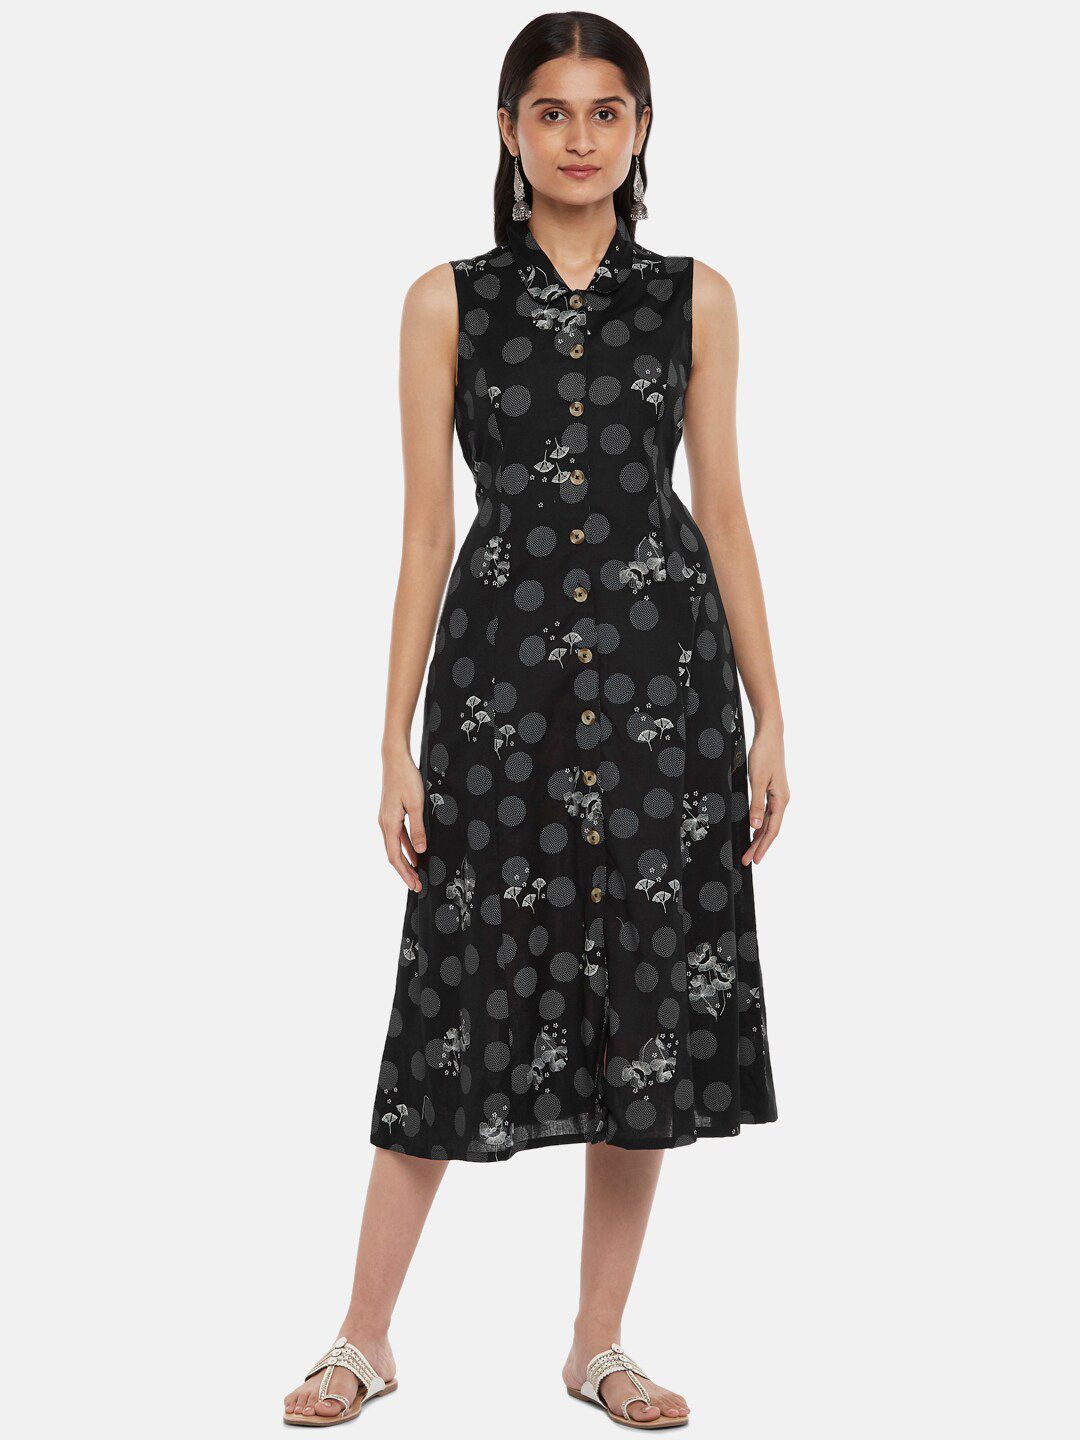 AKKRITI BY PANTALOONS Women Black Cotton Floral Shirt Midi Dress Price in India